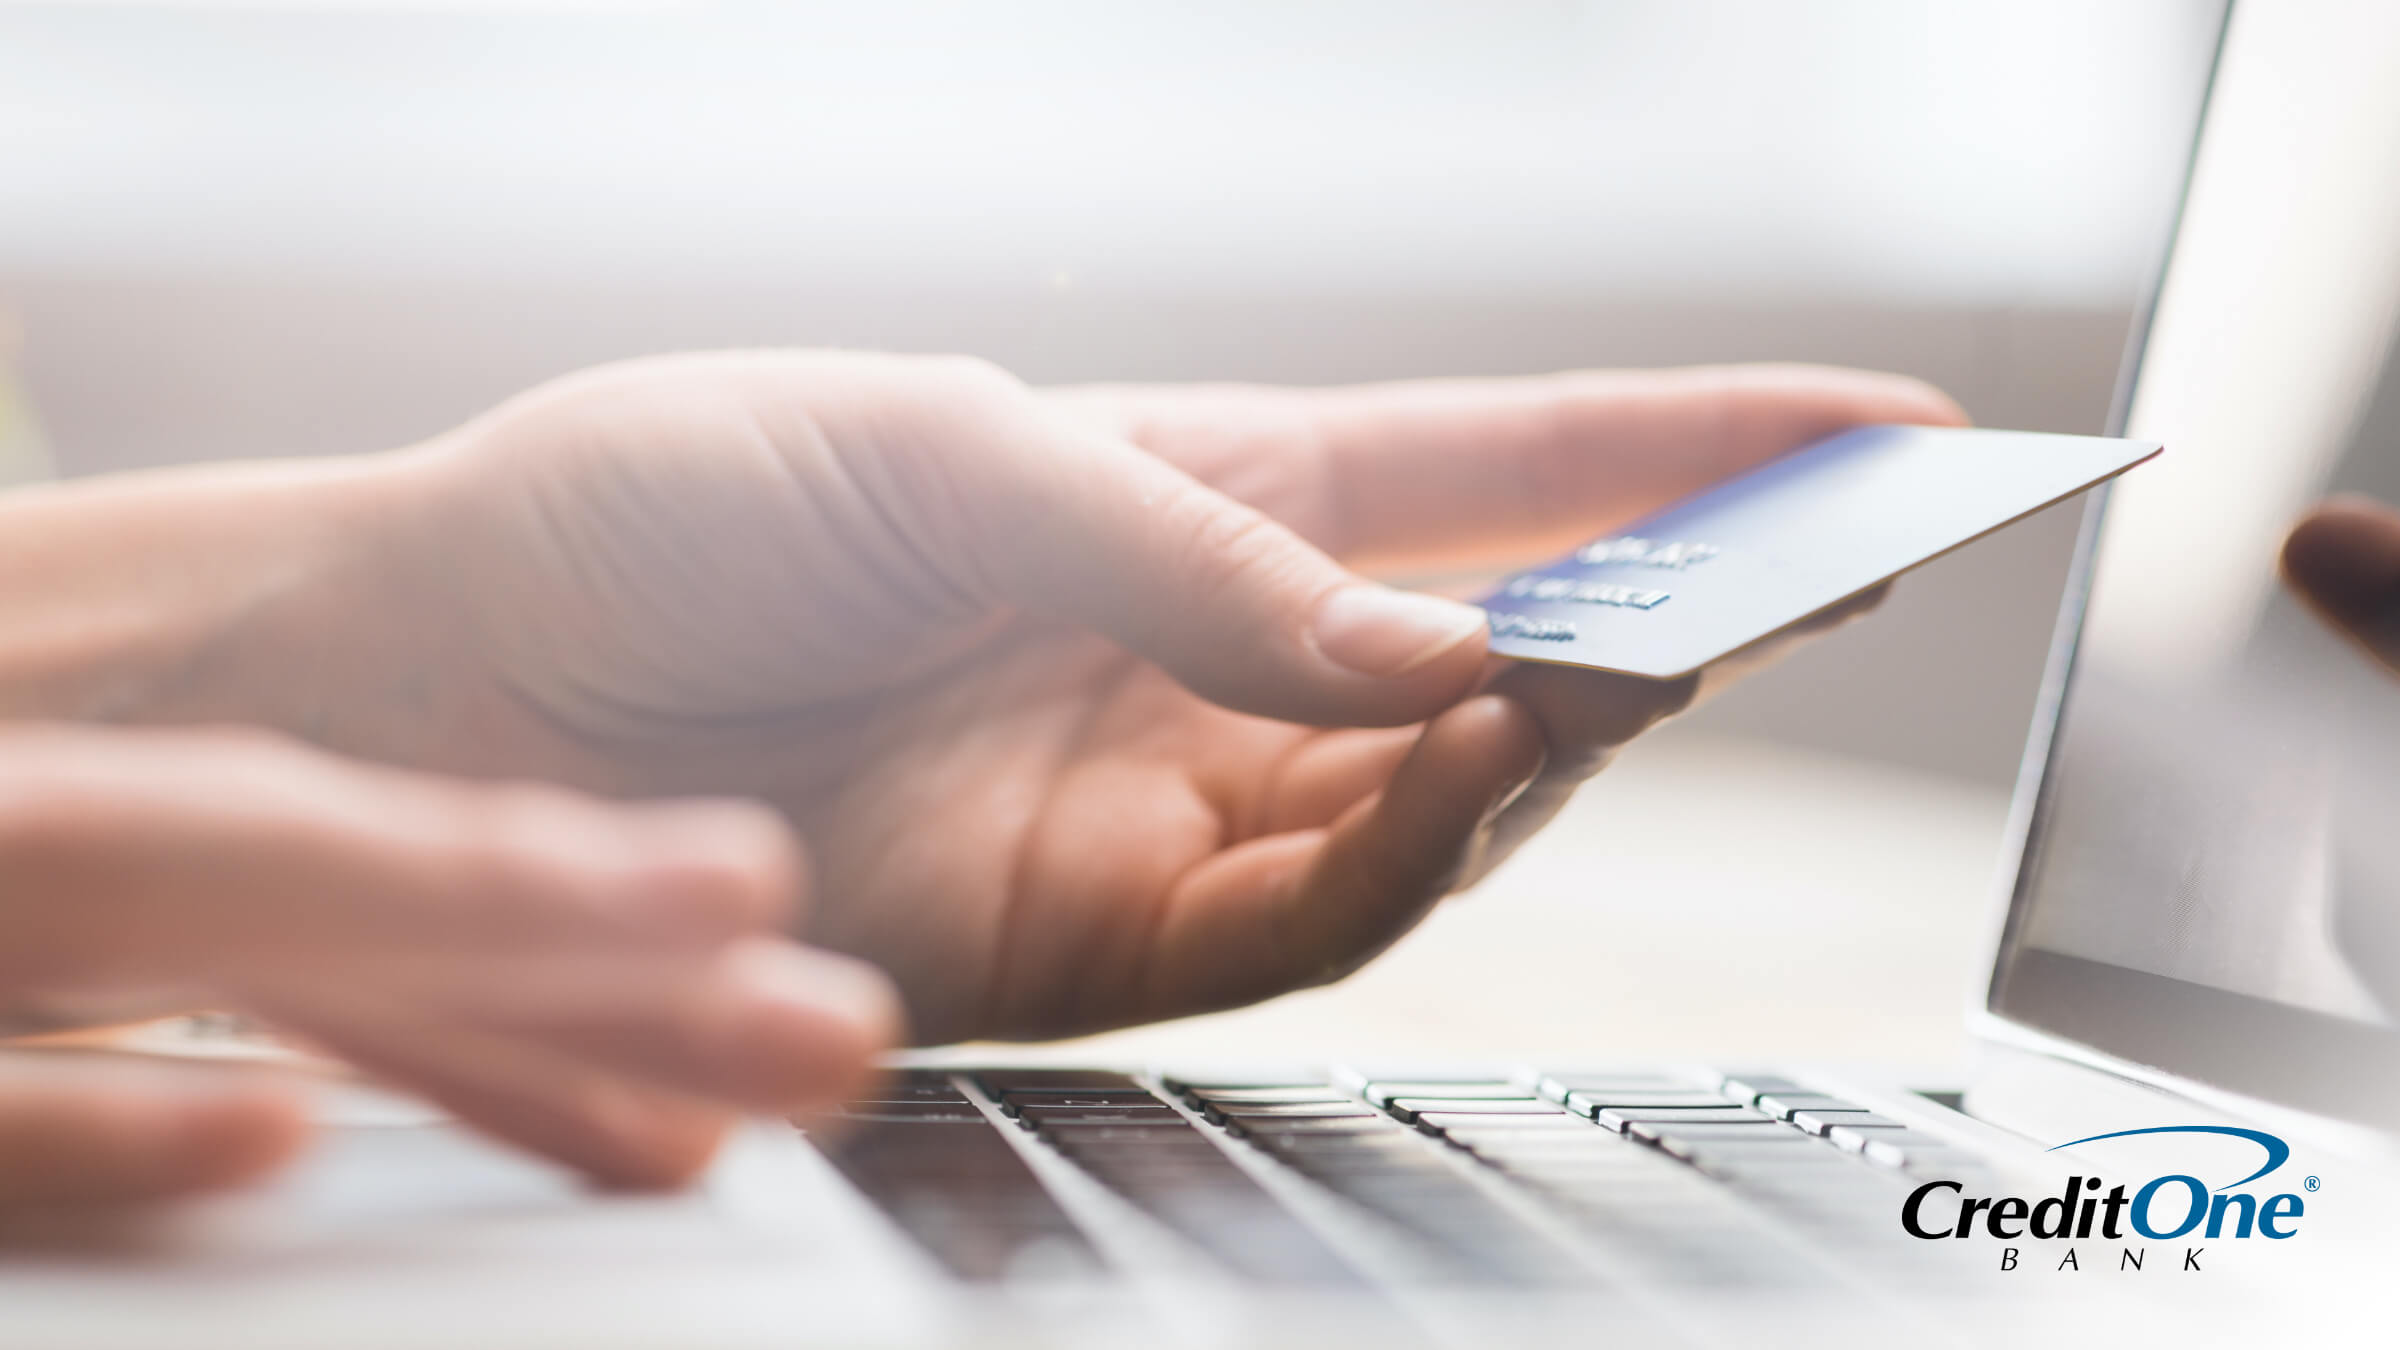 Inputting credit card information online